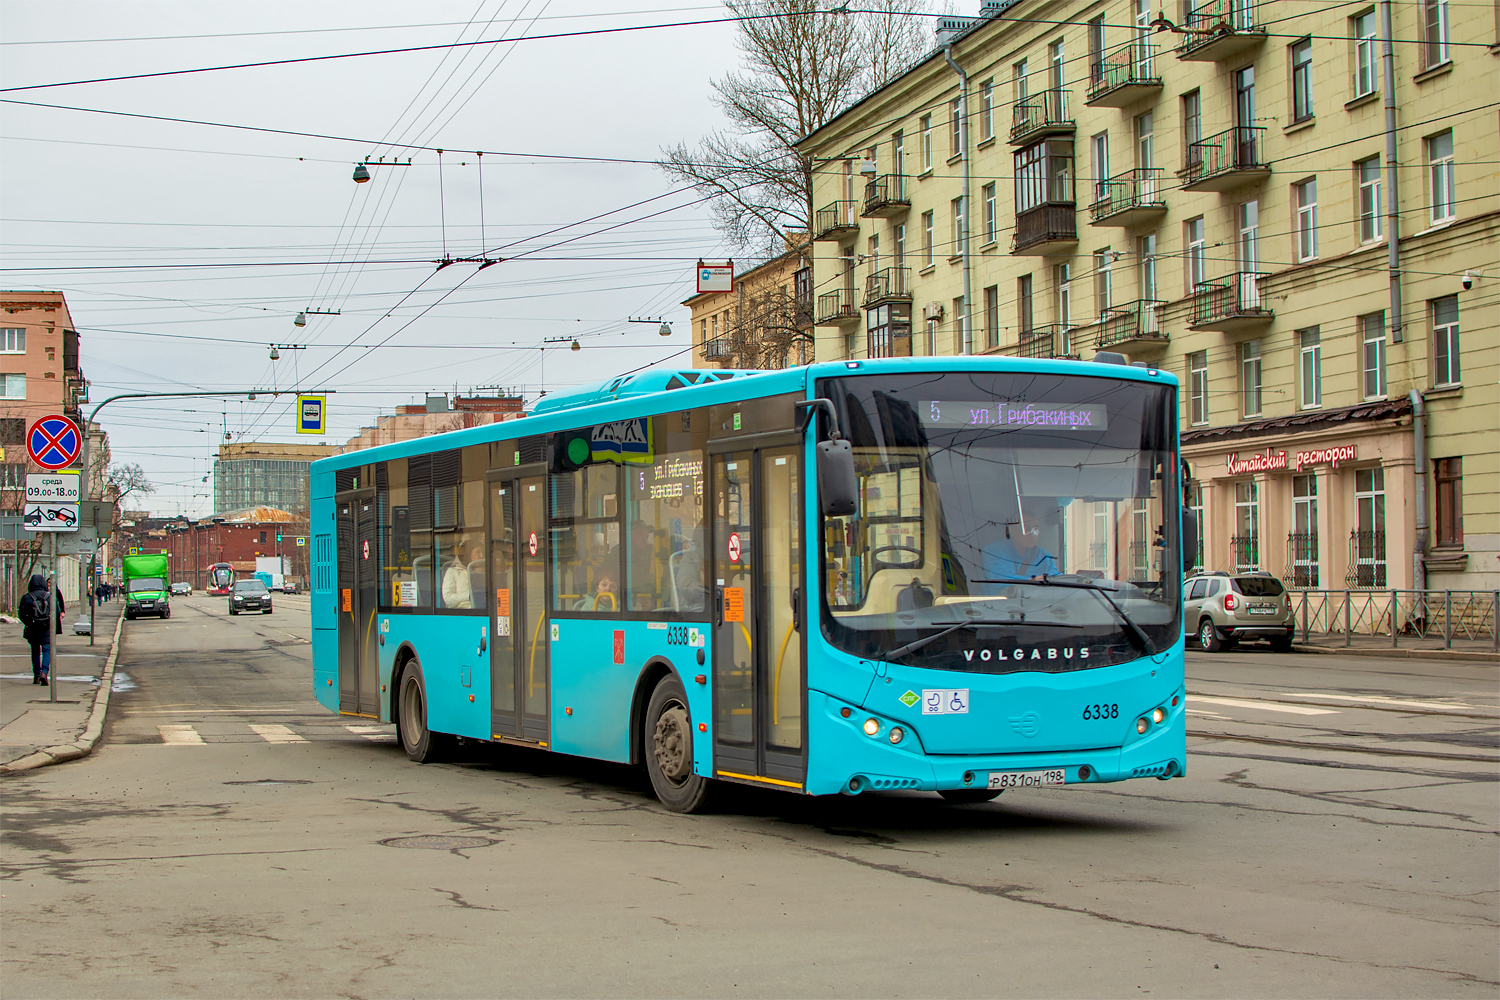 Saint Petersburg, Volgabus-5270.G4 (LNG) # 6338